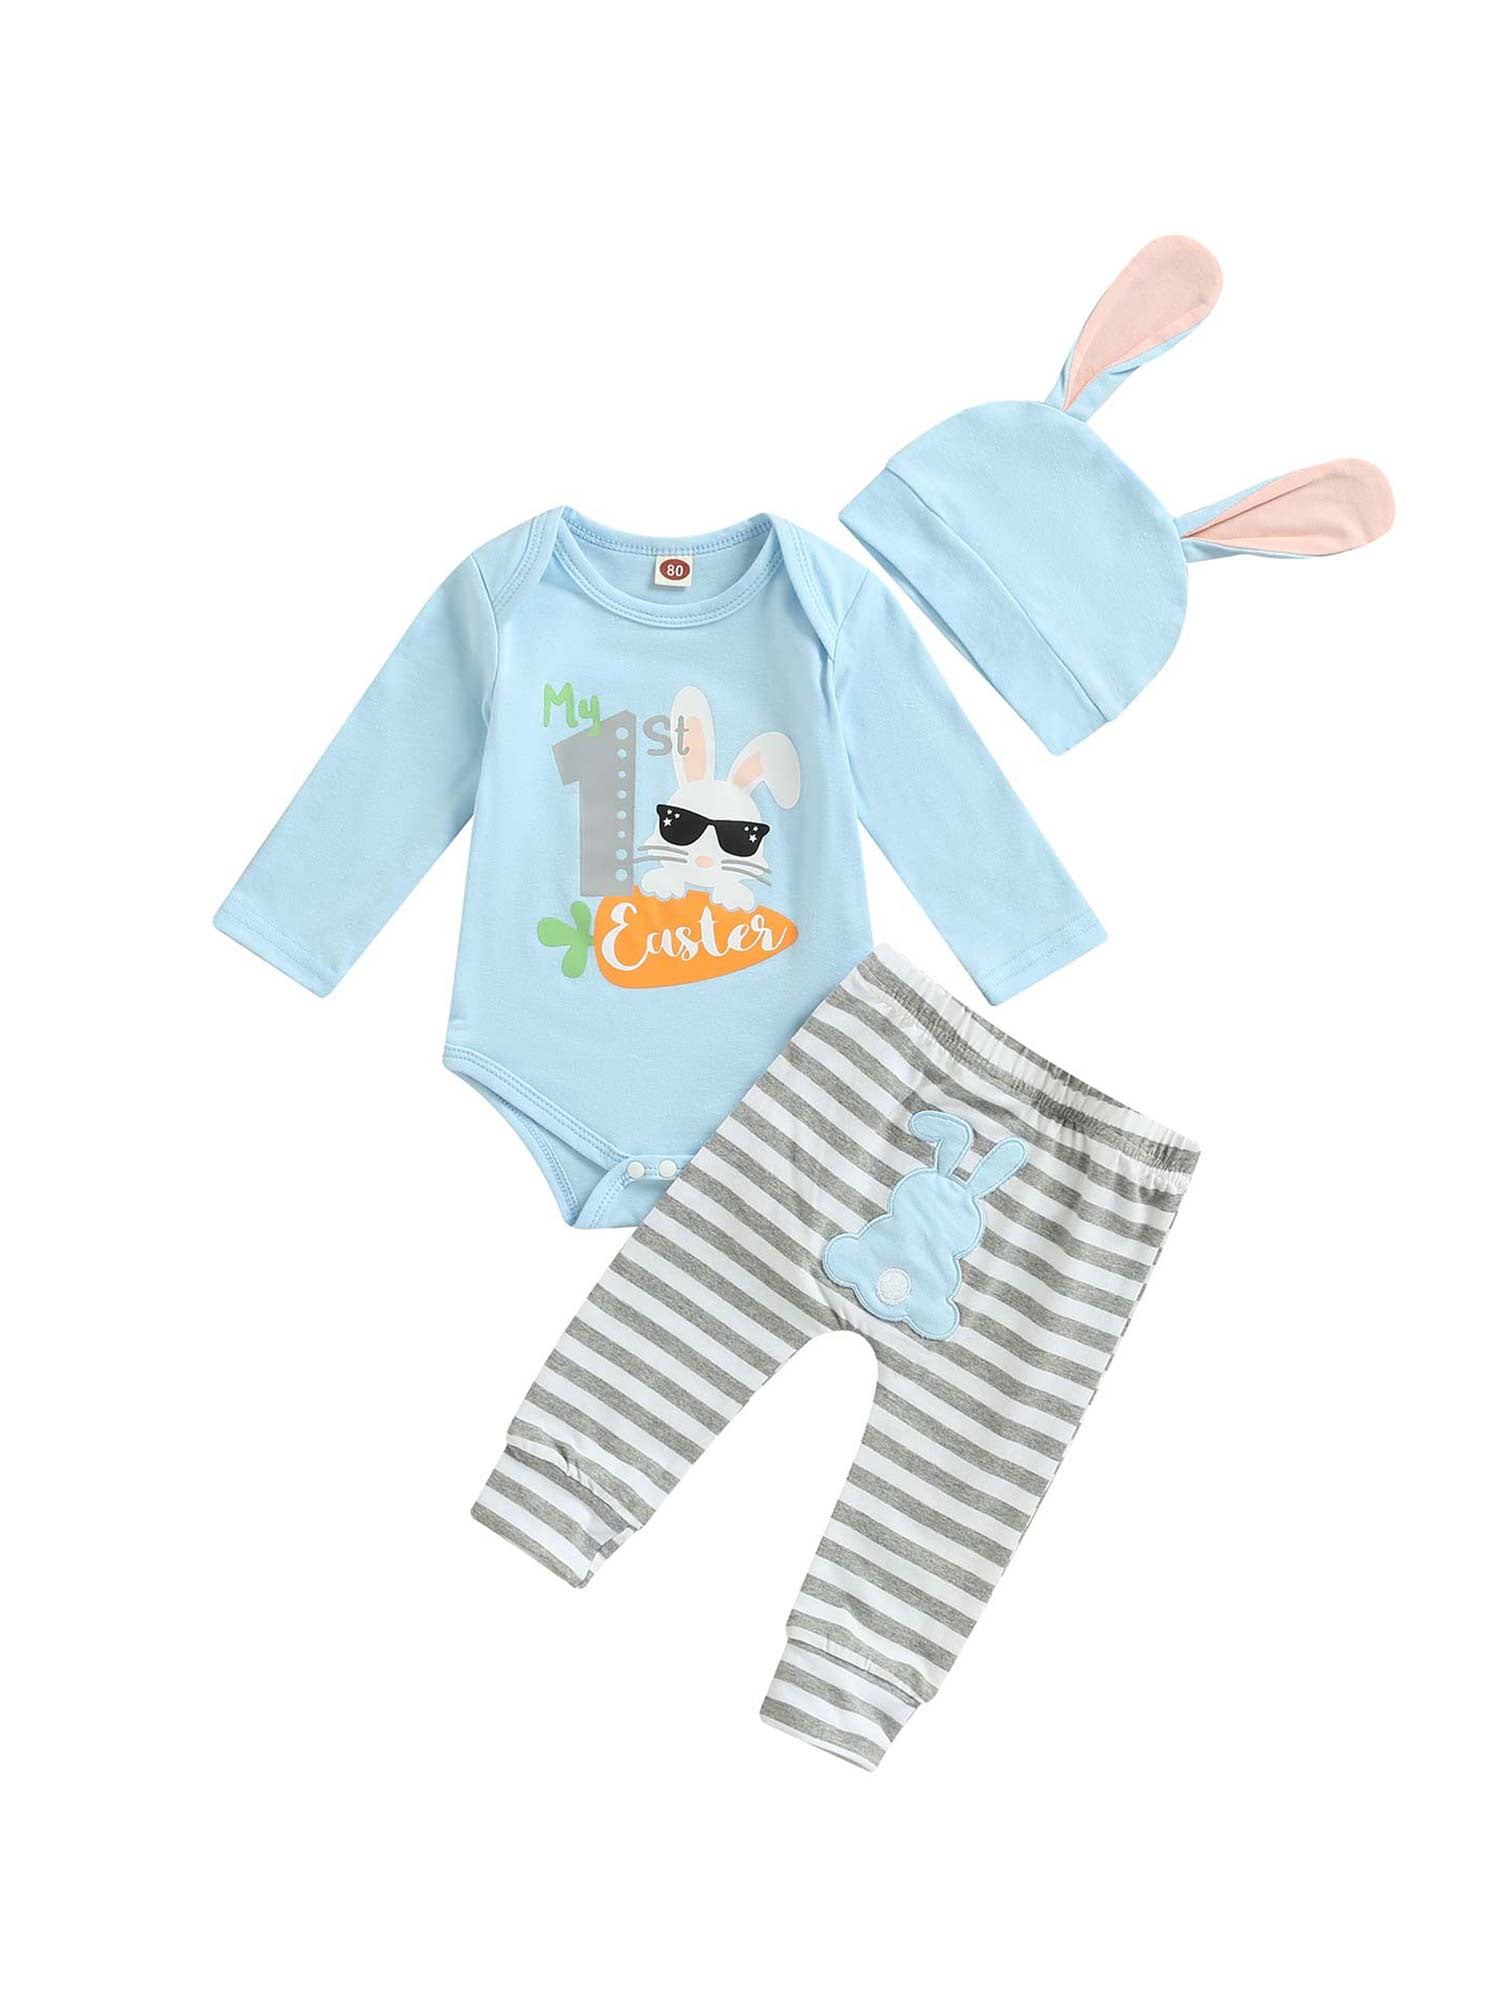 Infant Newborn Baby Boy Girl Romper St.Patrick's Day Irish Festival Element Print Long Sleeve Jumpsuit for Toddler Kids